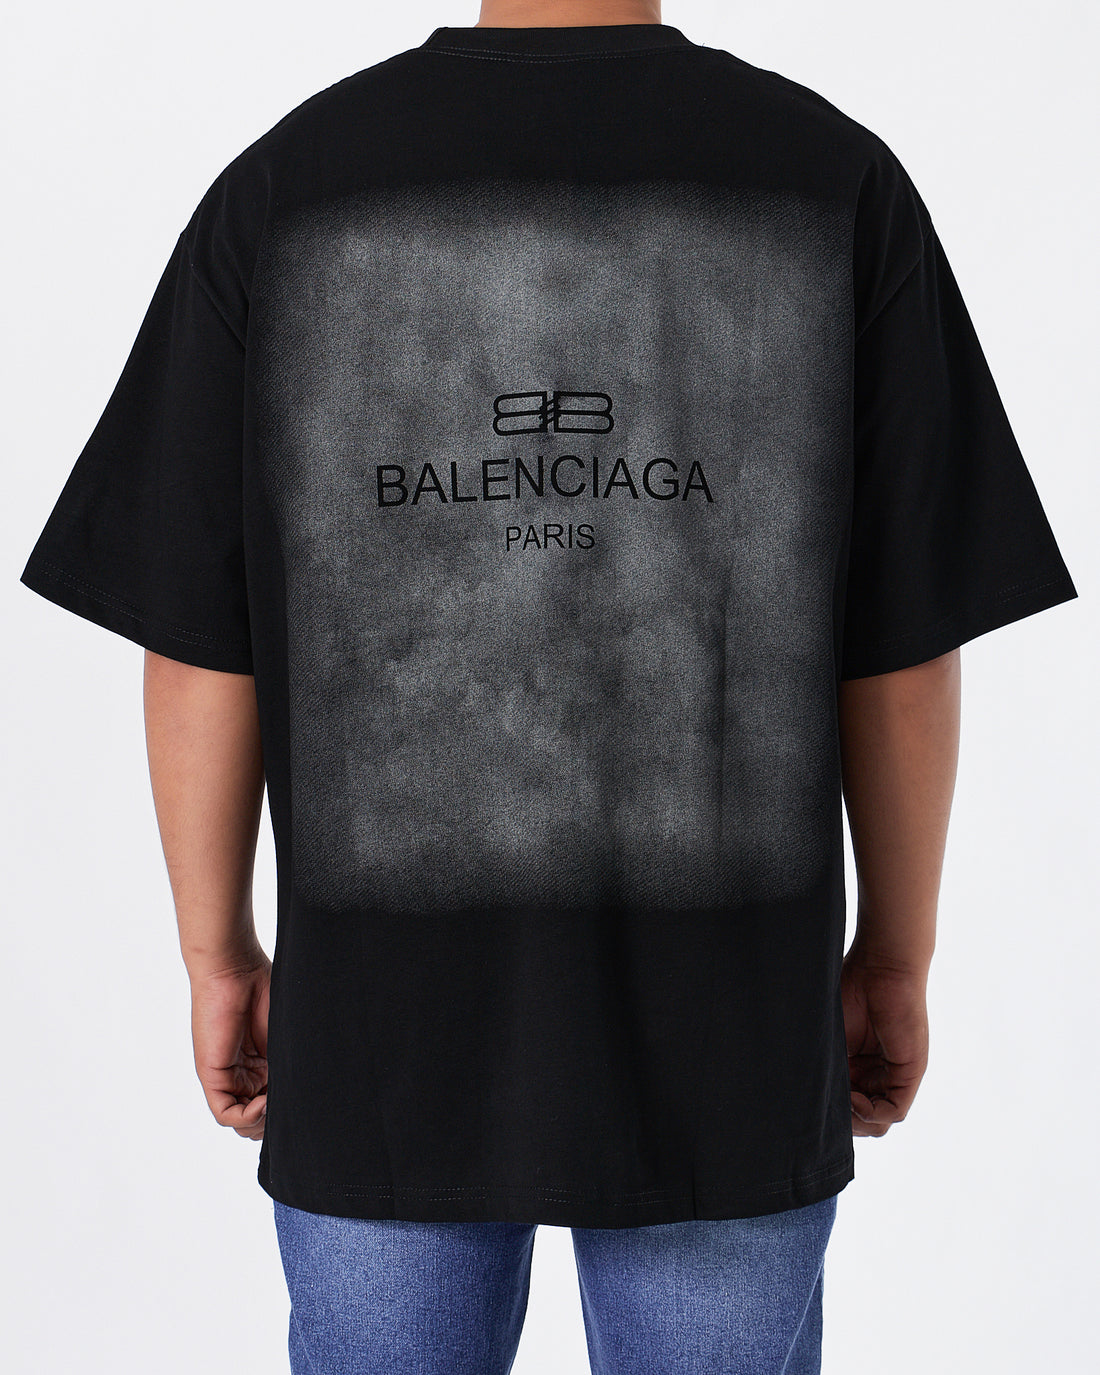 BAL Sliver Logo Printed Men Black T-Shirt 25.90